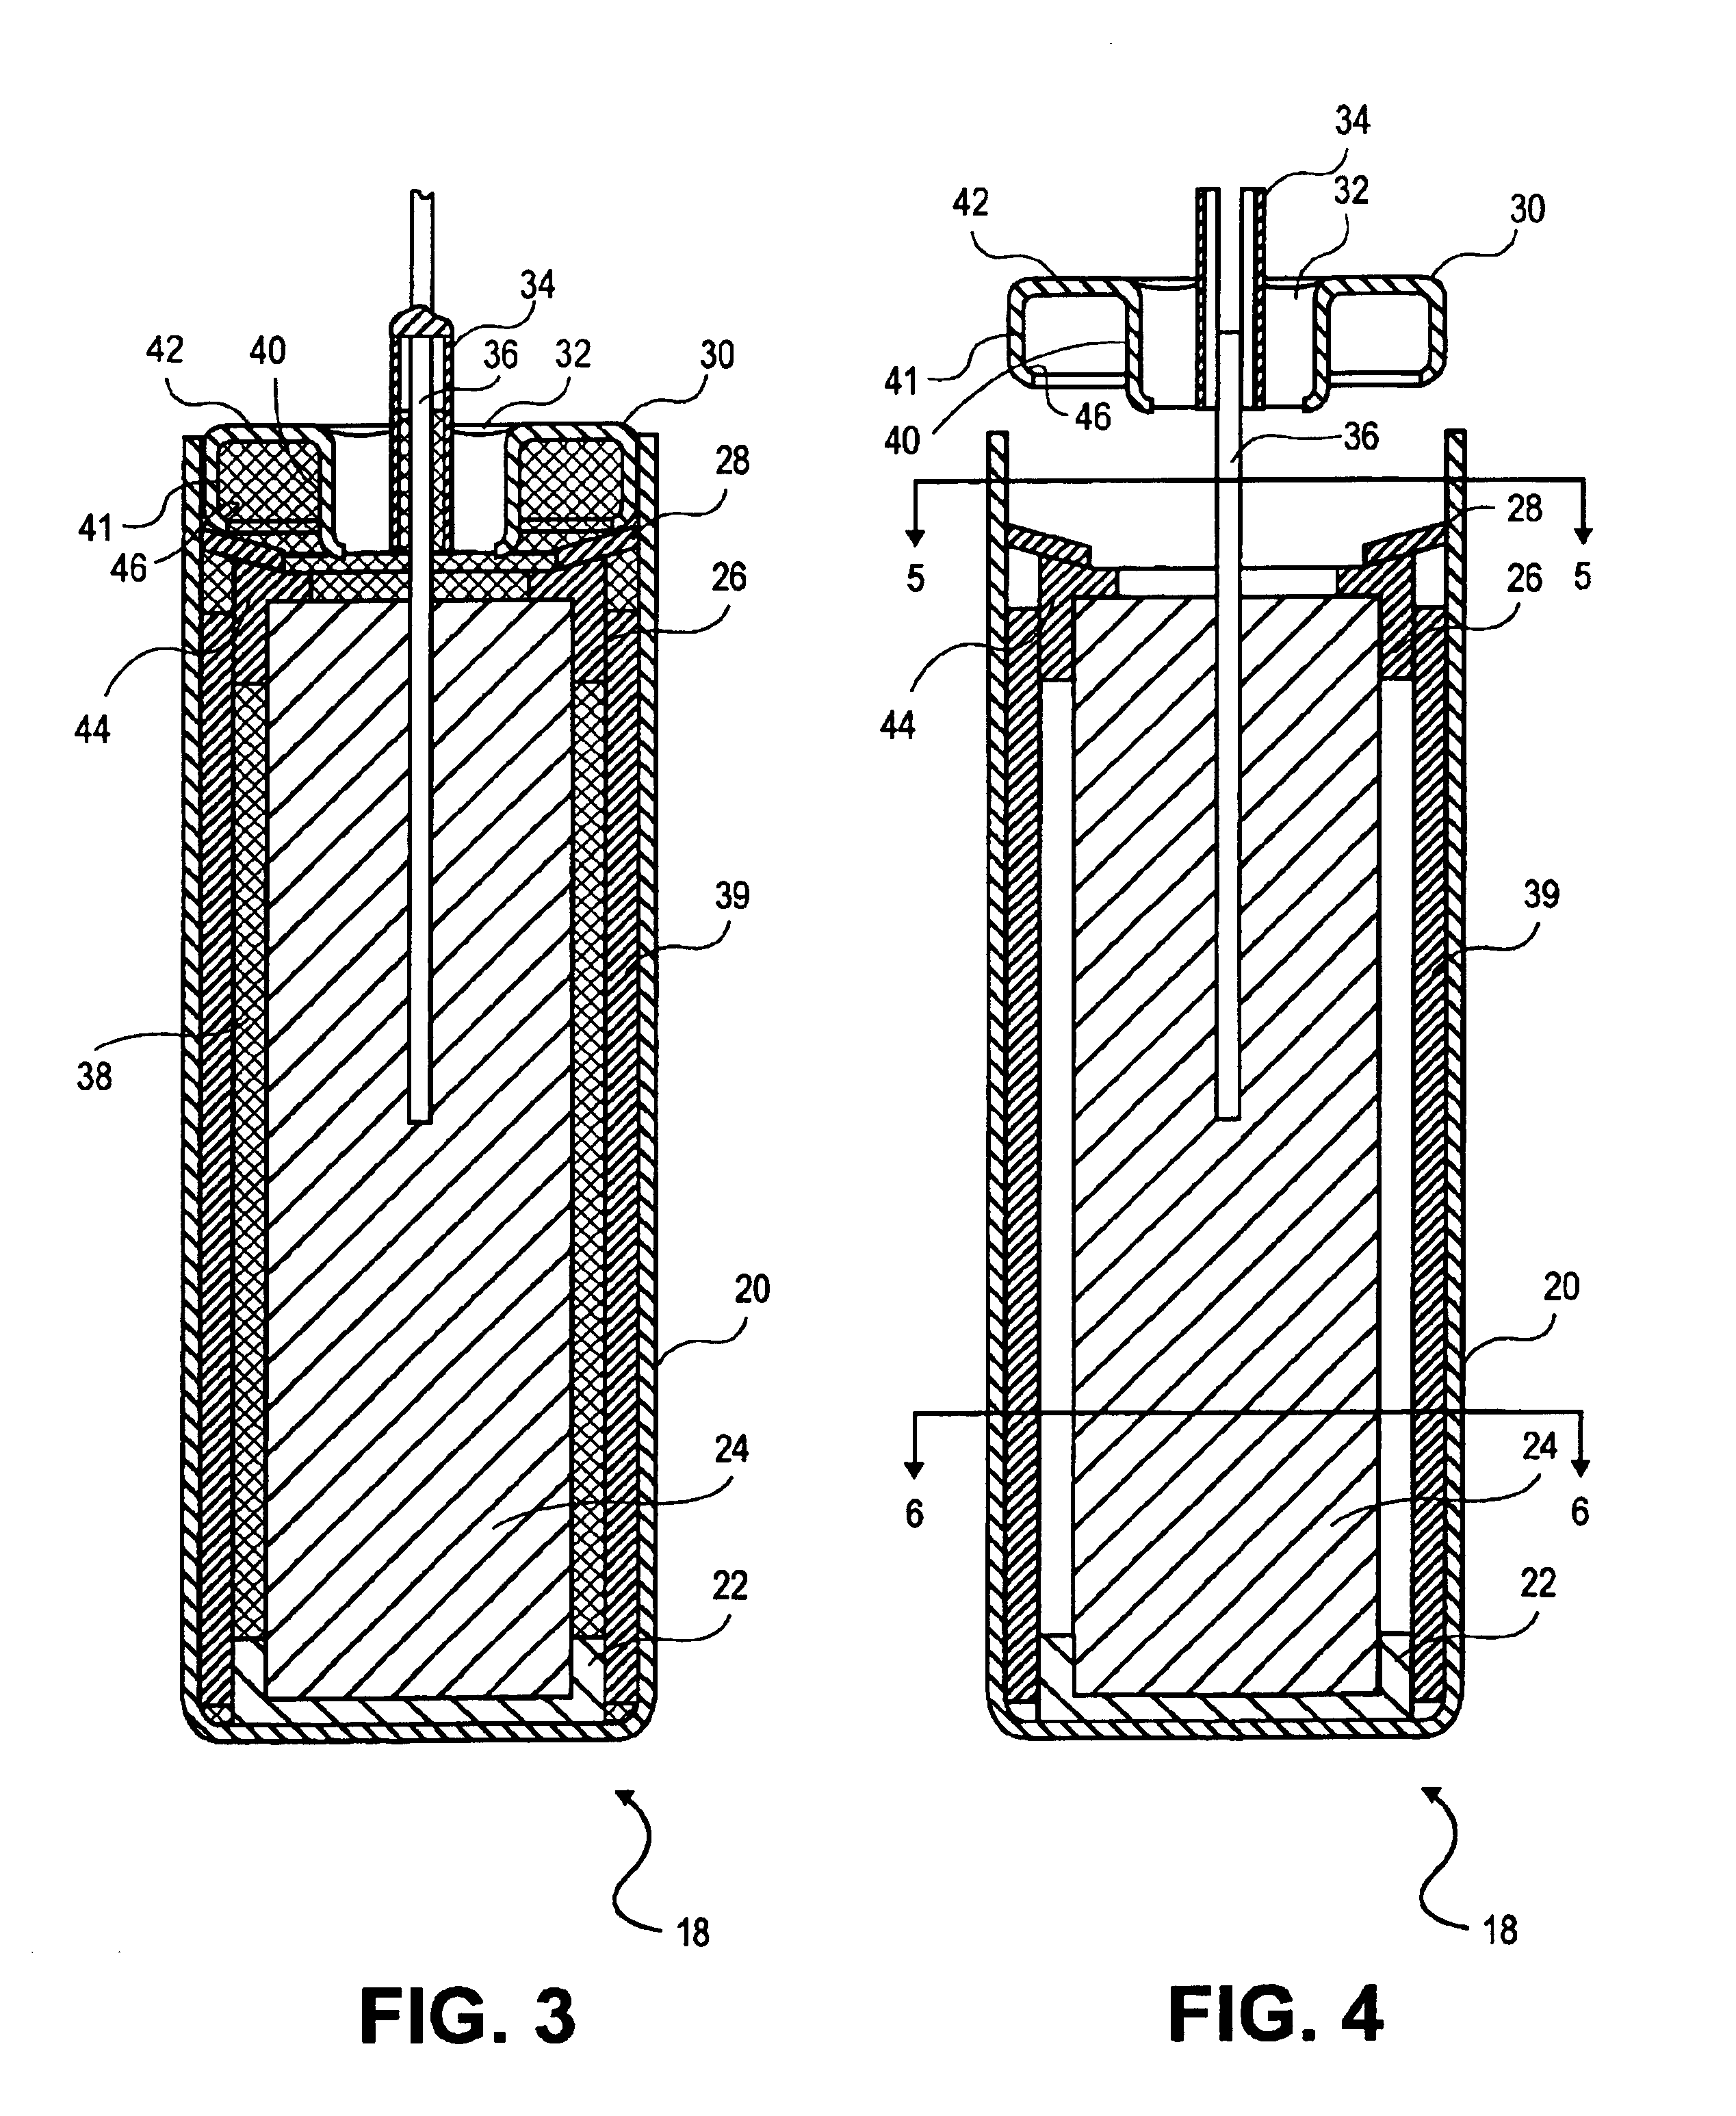 Tantalum capacitor case with increased volumetric efficiency